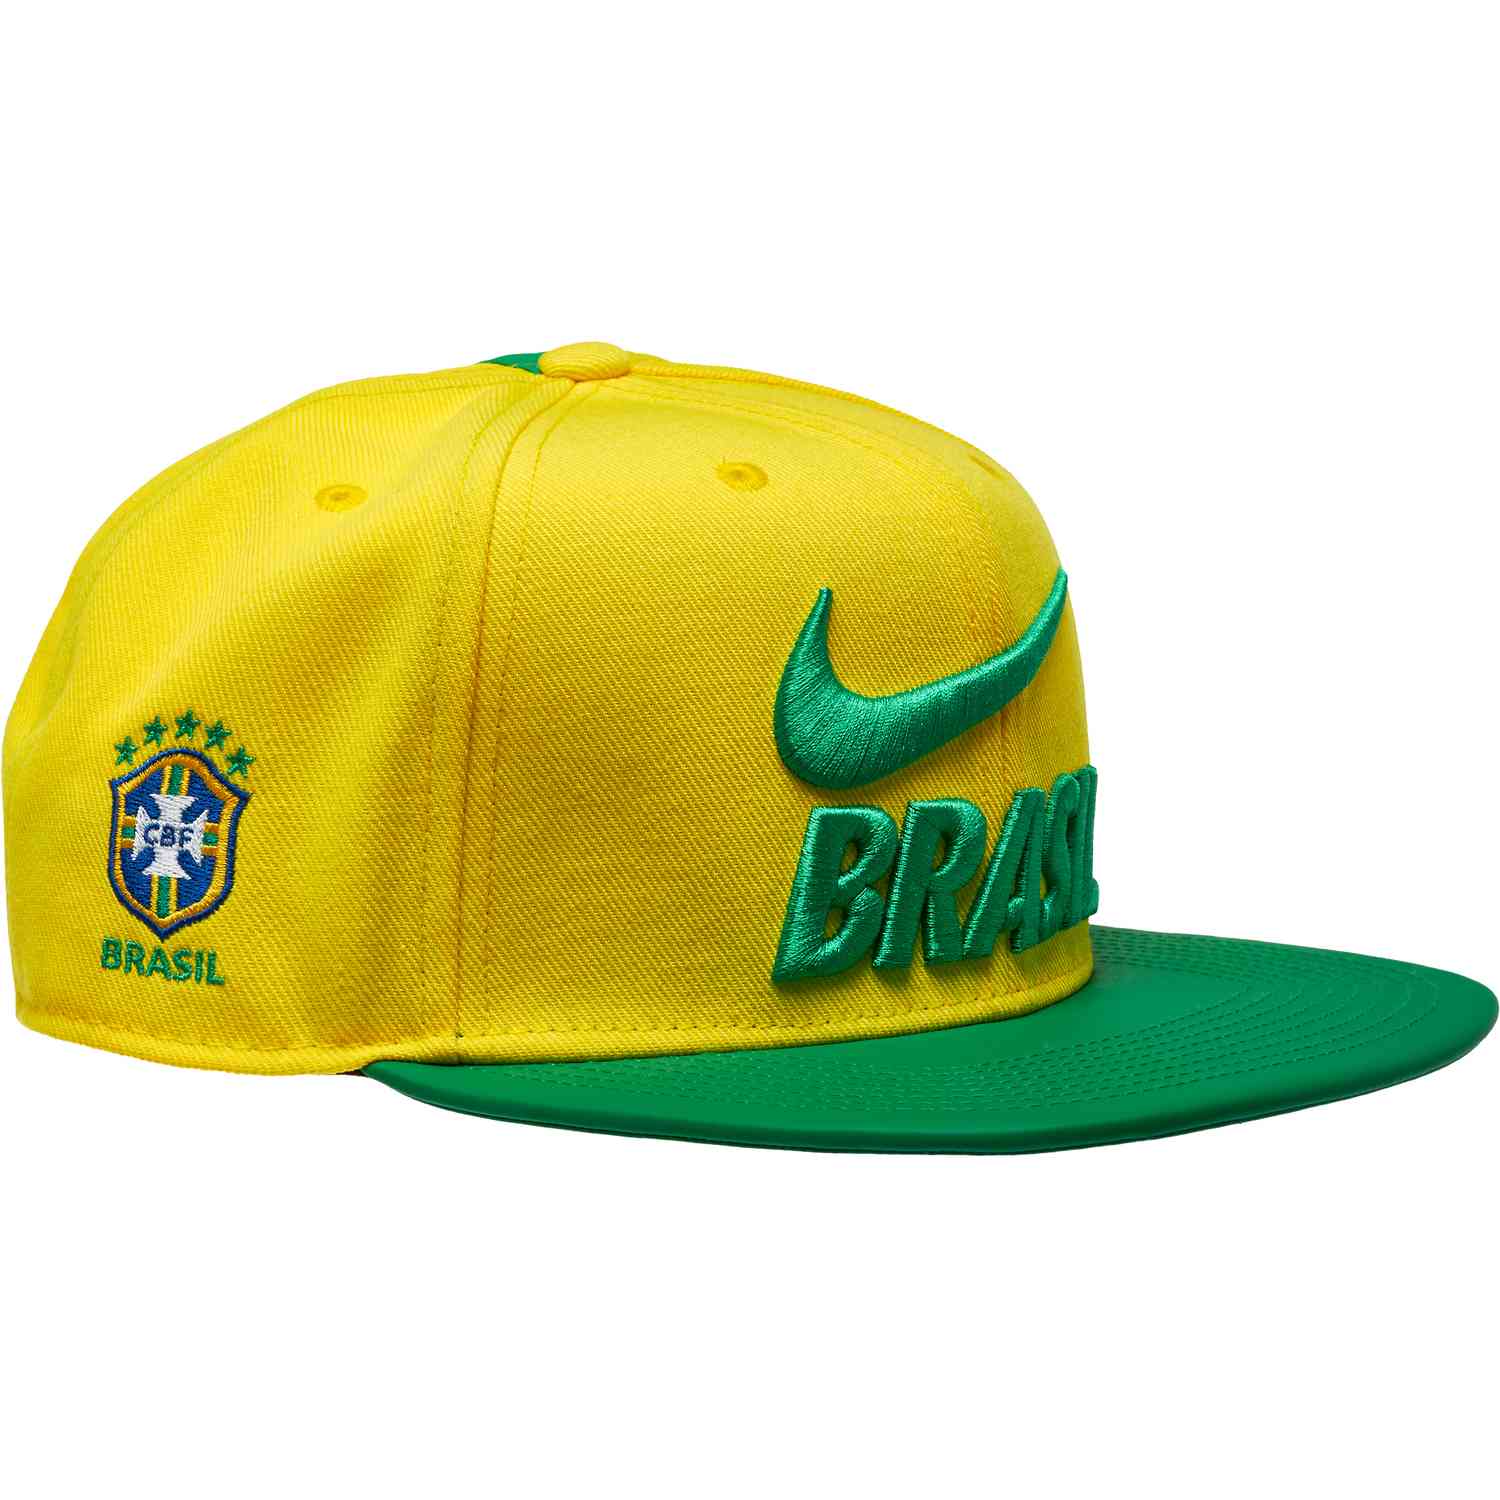 Nike Brazil Pride Flat Bill Cap - Midwest gold/Lucky Green/Pine